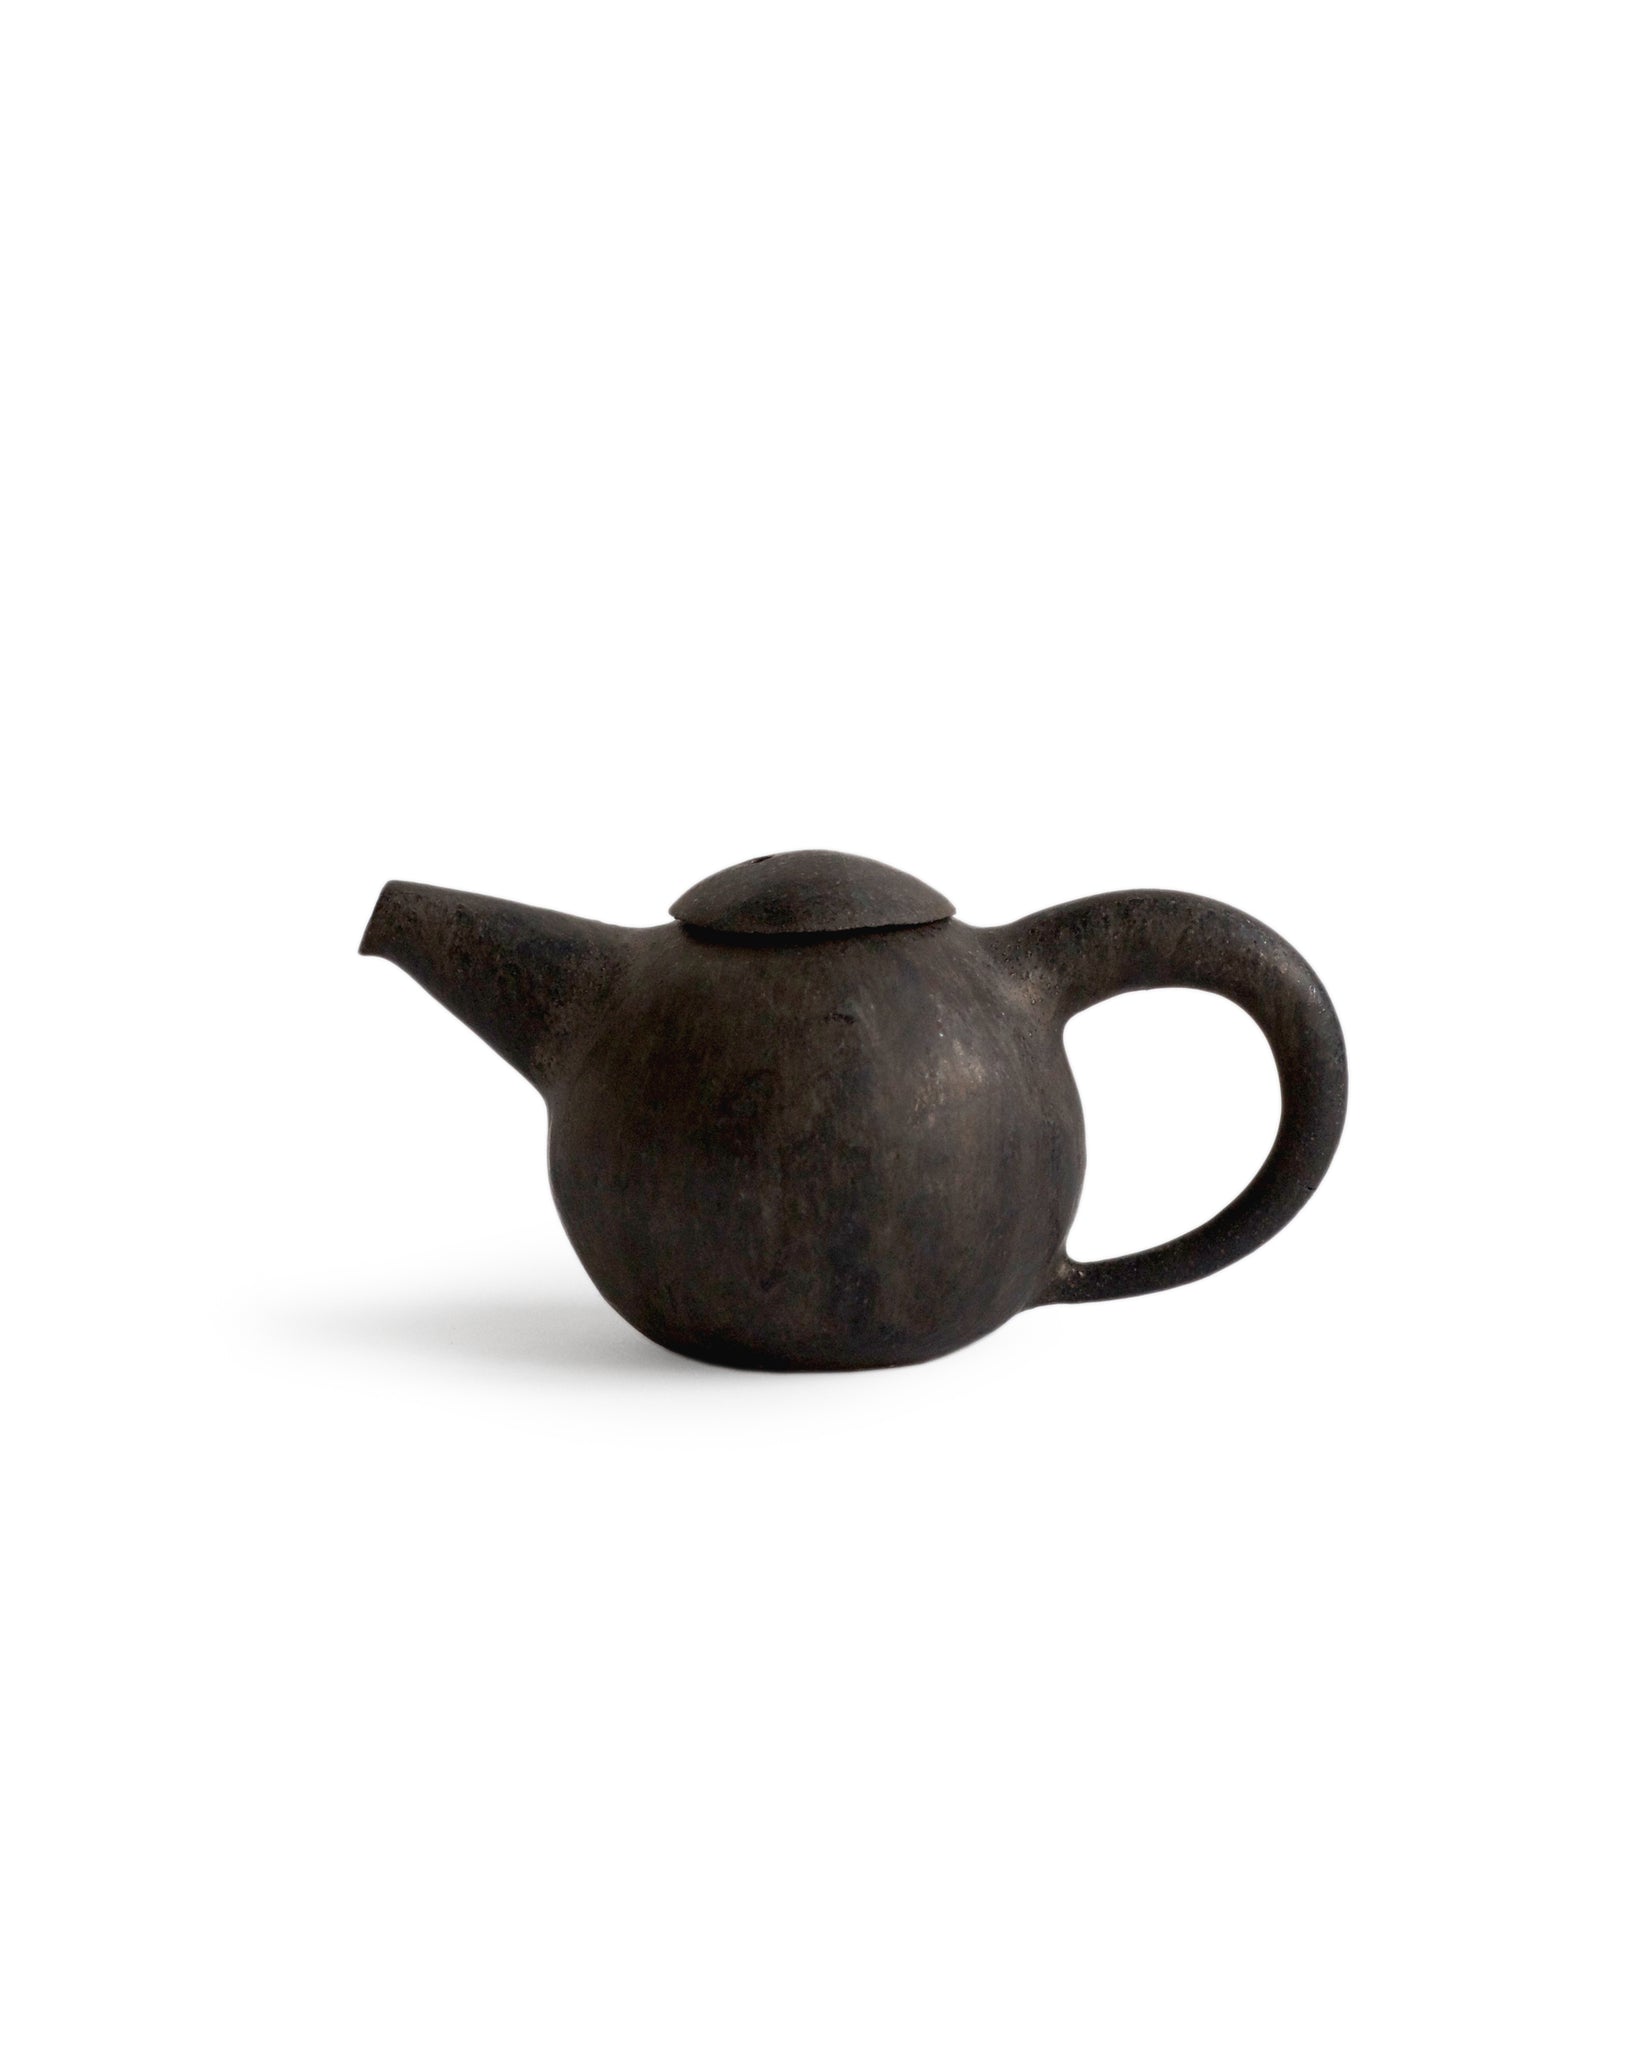 Black Teapot by Keisuke Iwata against white backdrop